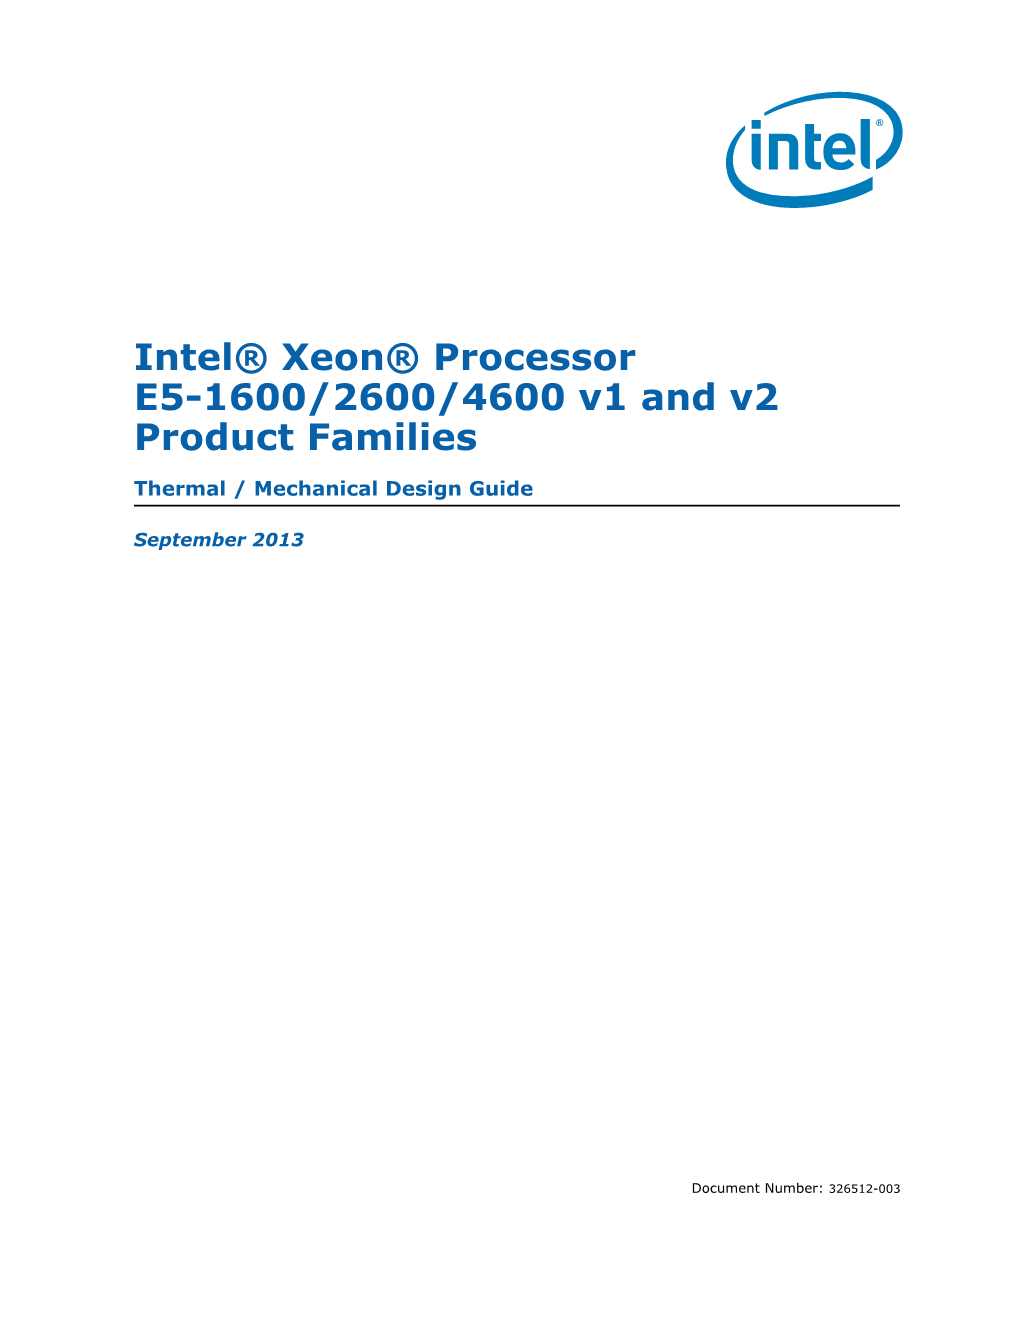 Intel® Xeon® Processor E5-1600/2600/4600 V1 and V2 Product Families